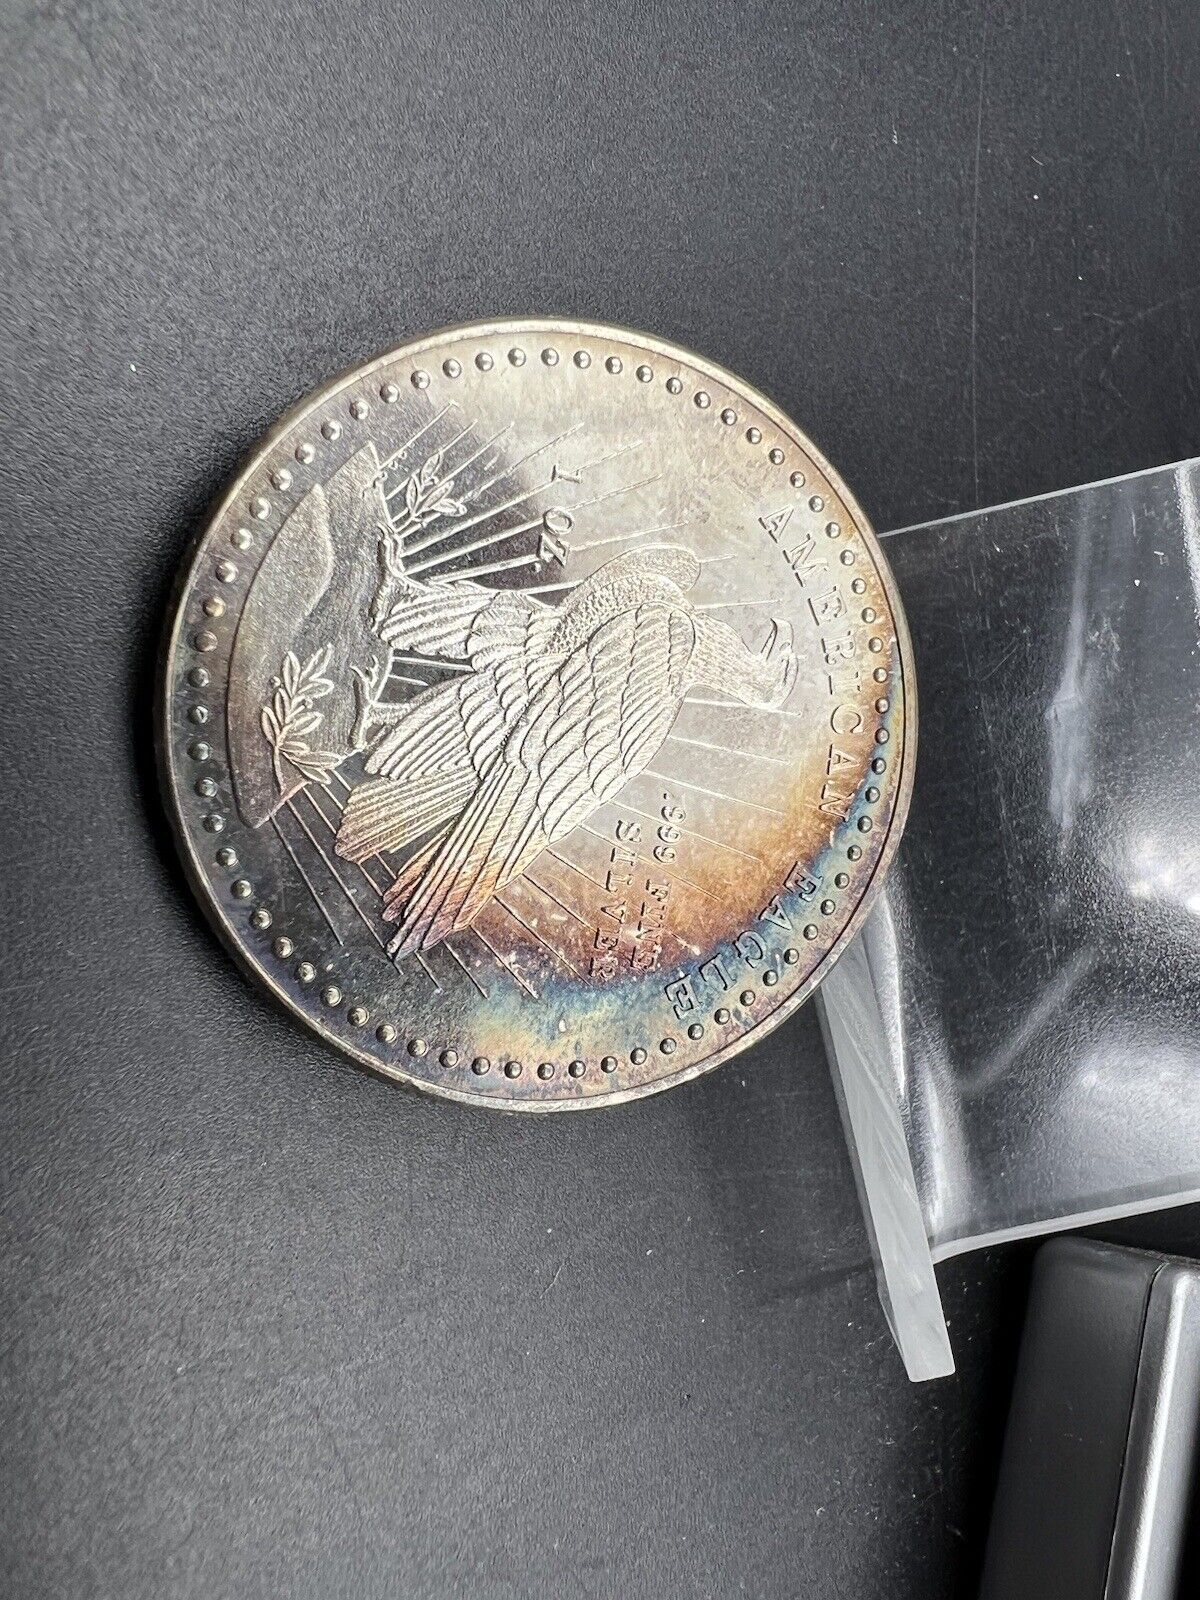 World Wide Mint 1 oz Silver Classic Liberty Head / Eagle round coin BU